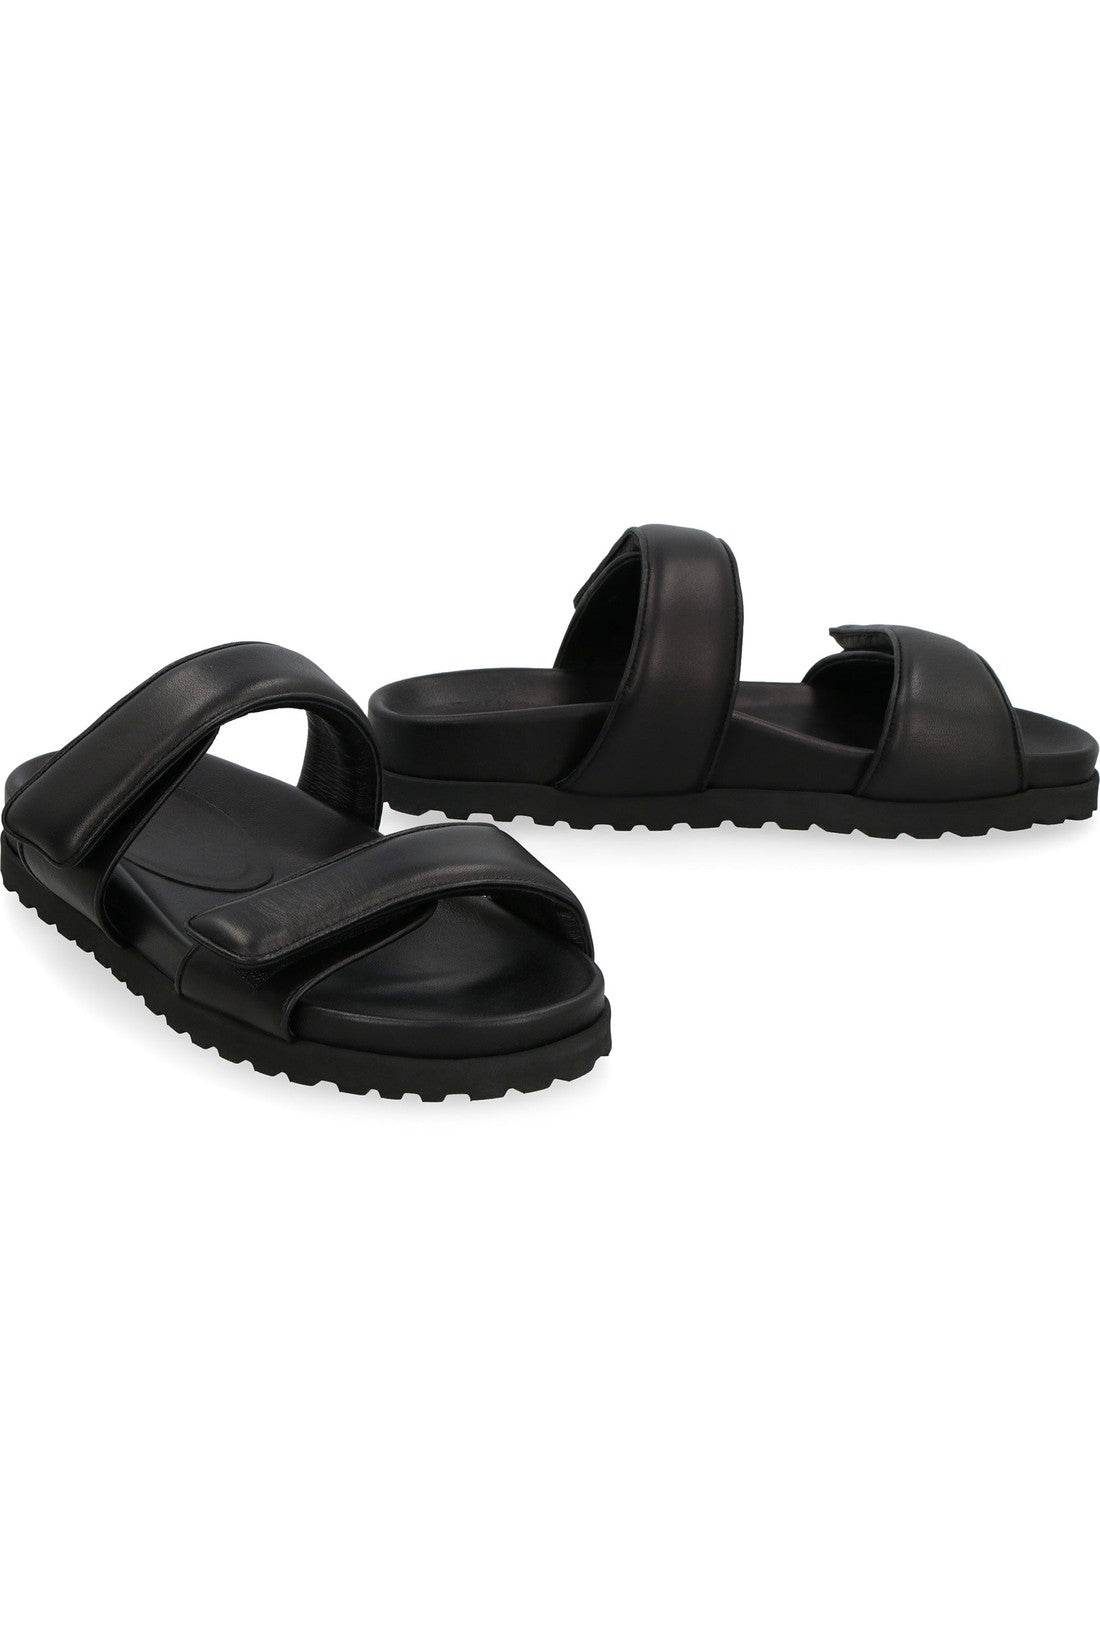 GIA BORGHINI-OUTLET-SALE-Perni 11 leather flat sandals-ARCHIVIST